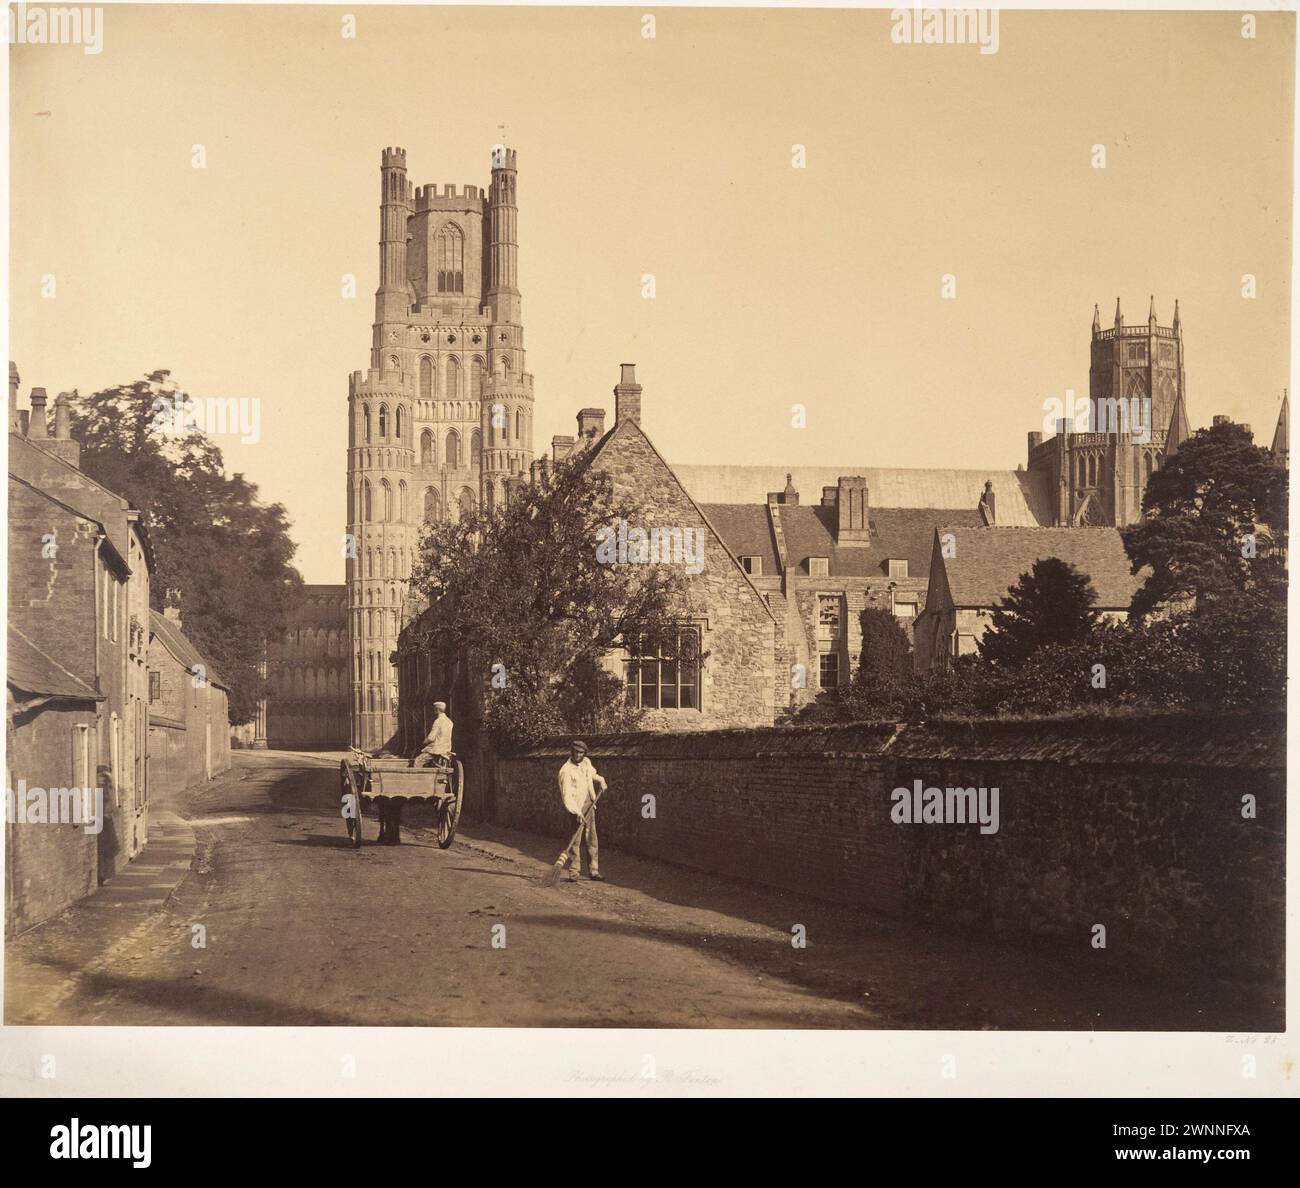 Ely Cathedral, della Grammar School. Roger Fenton. 1857. Stampa albume argento dal vetro negativo. Foto Stock